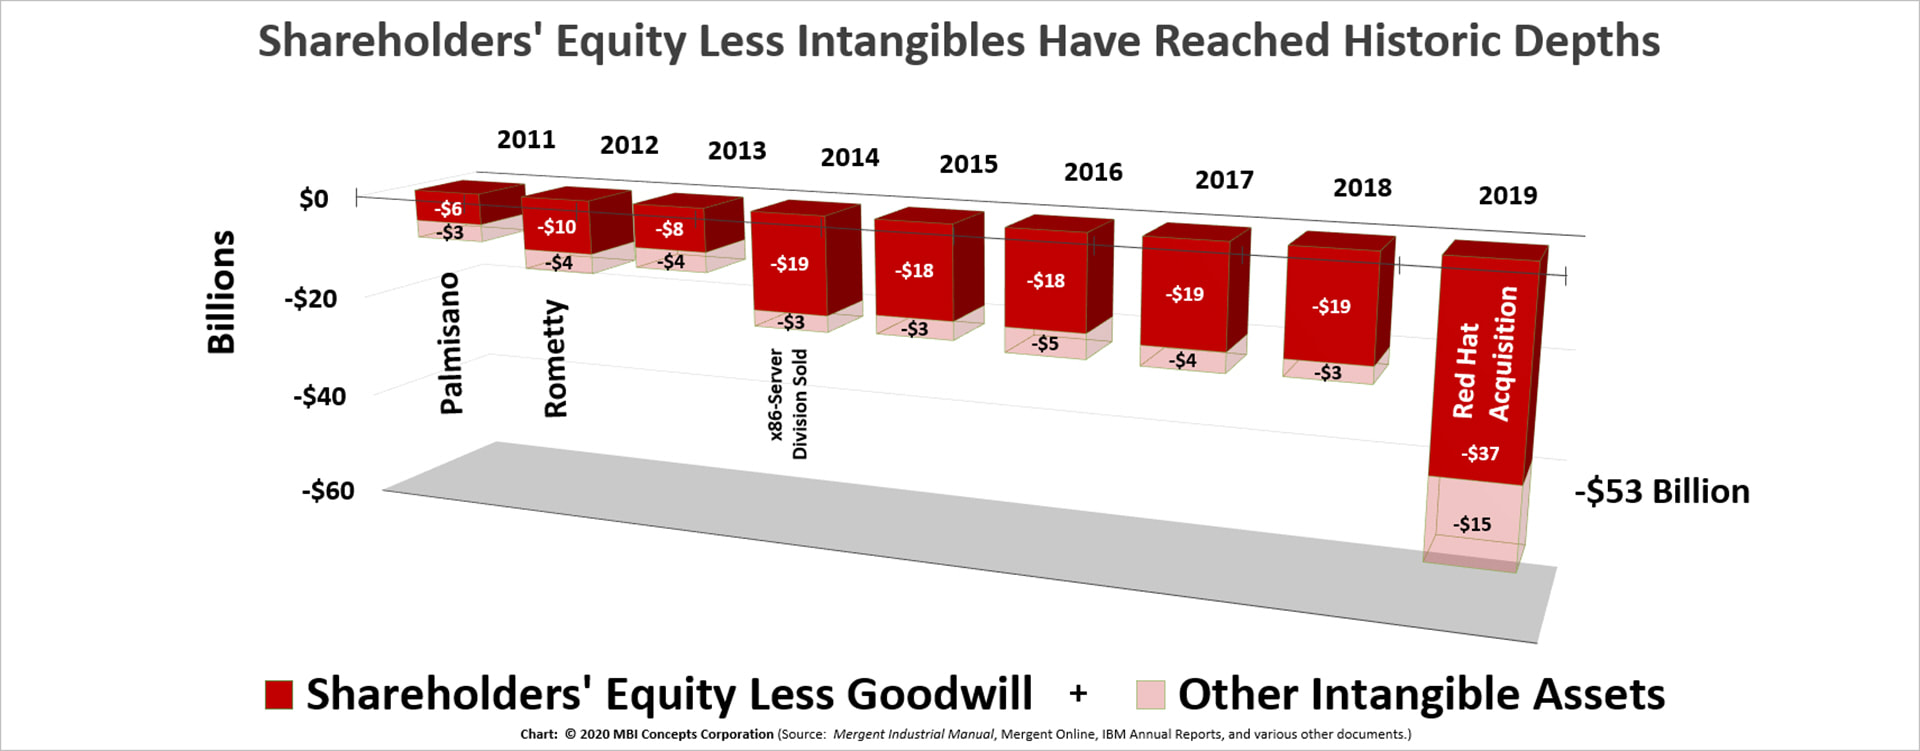 Chart of Virginia M. Rometty's Shareholders' Equity Less Goodwill and Shareholders' Equity less Intangibles from 2012 through 2019.